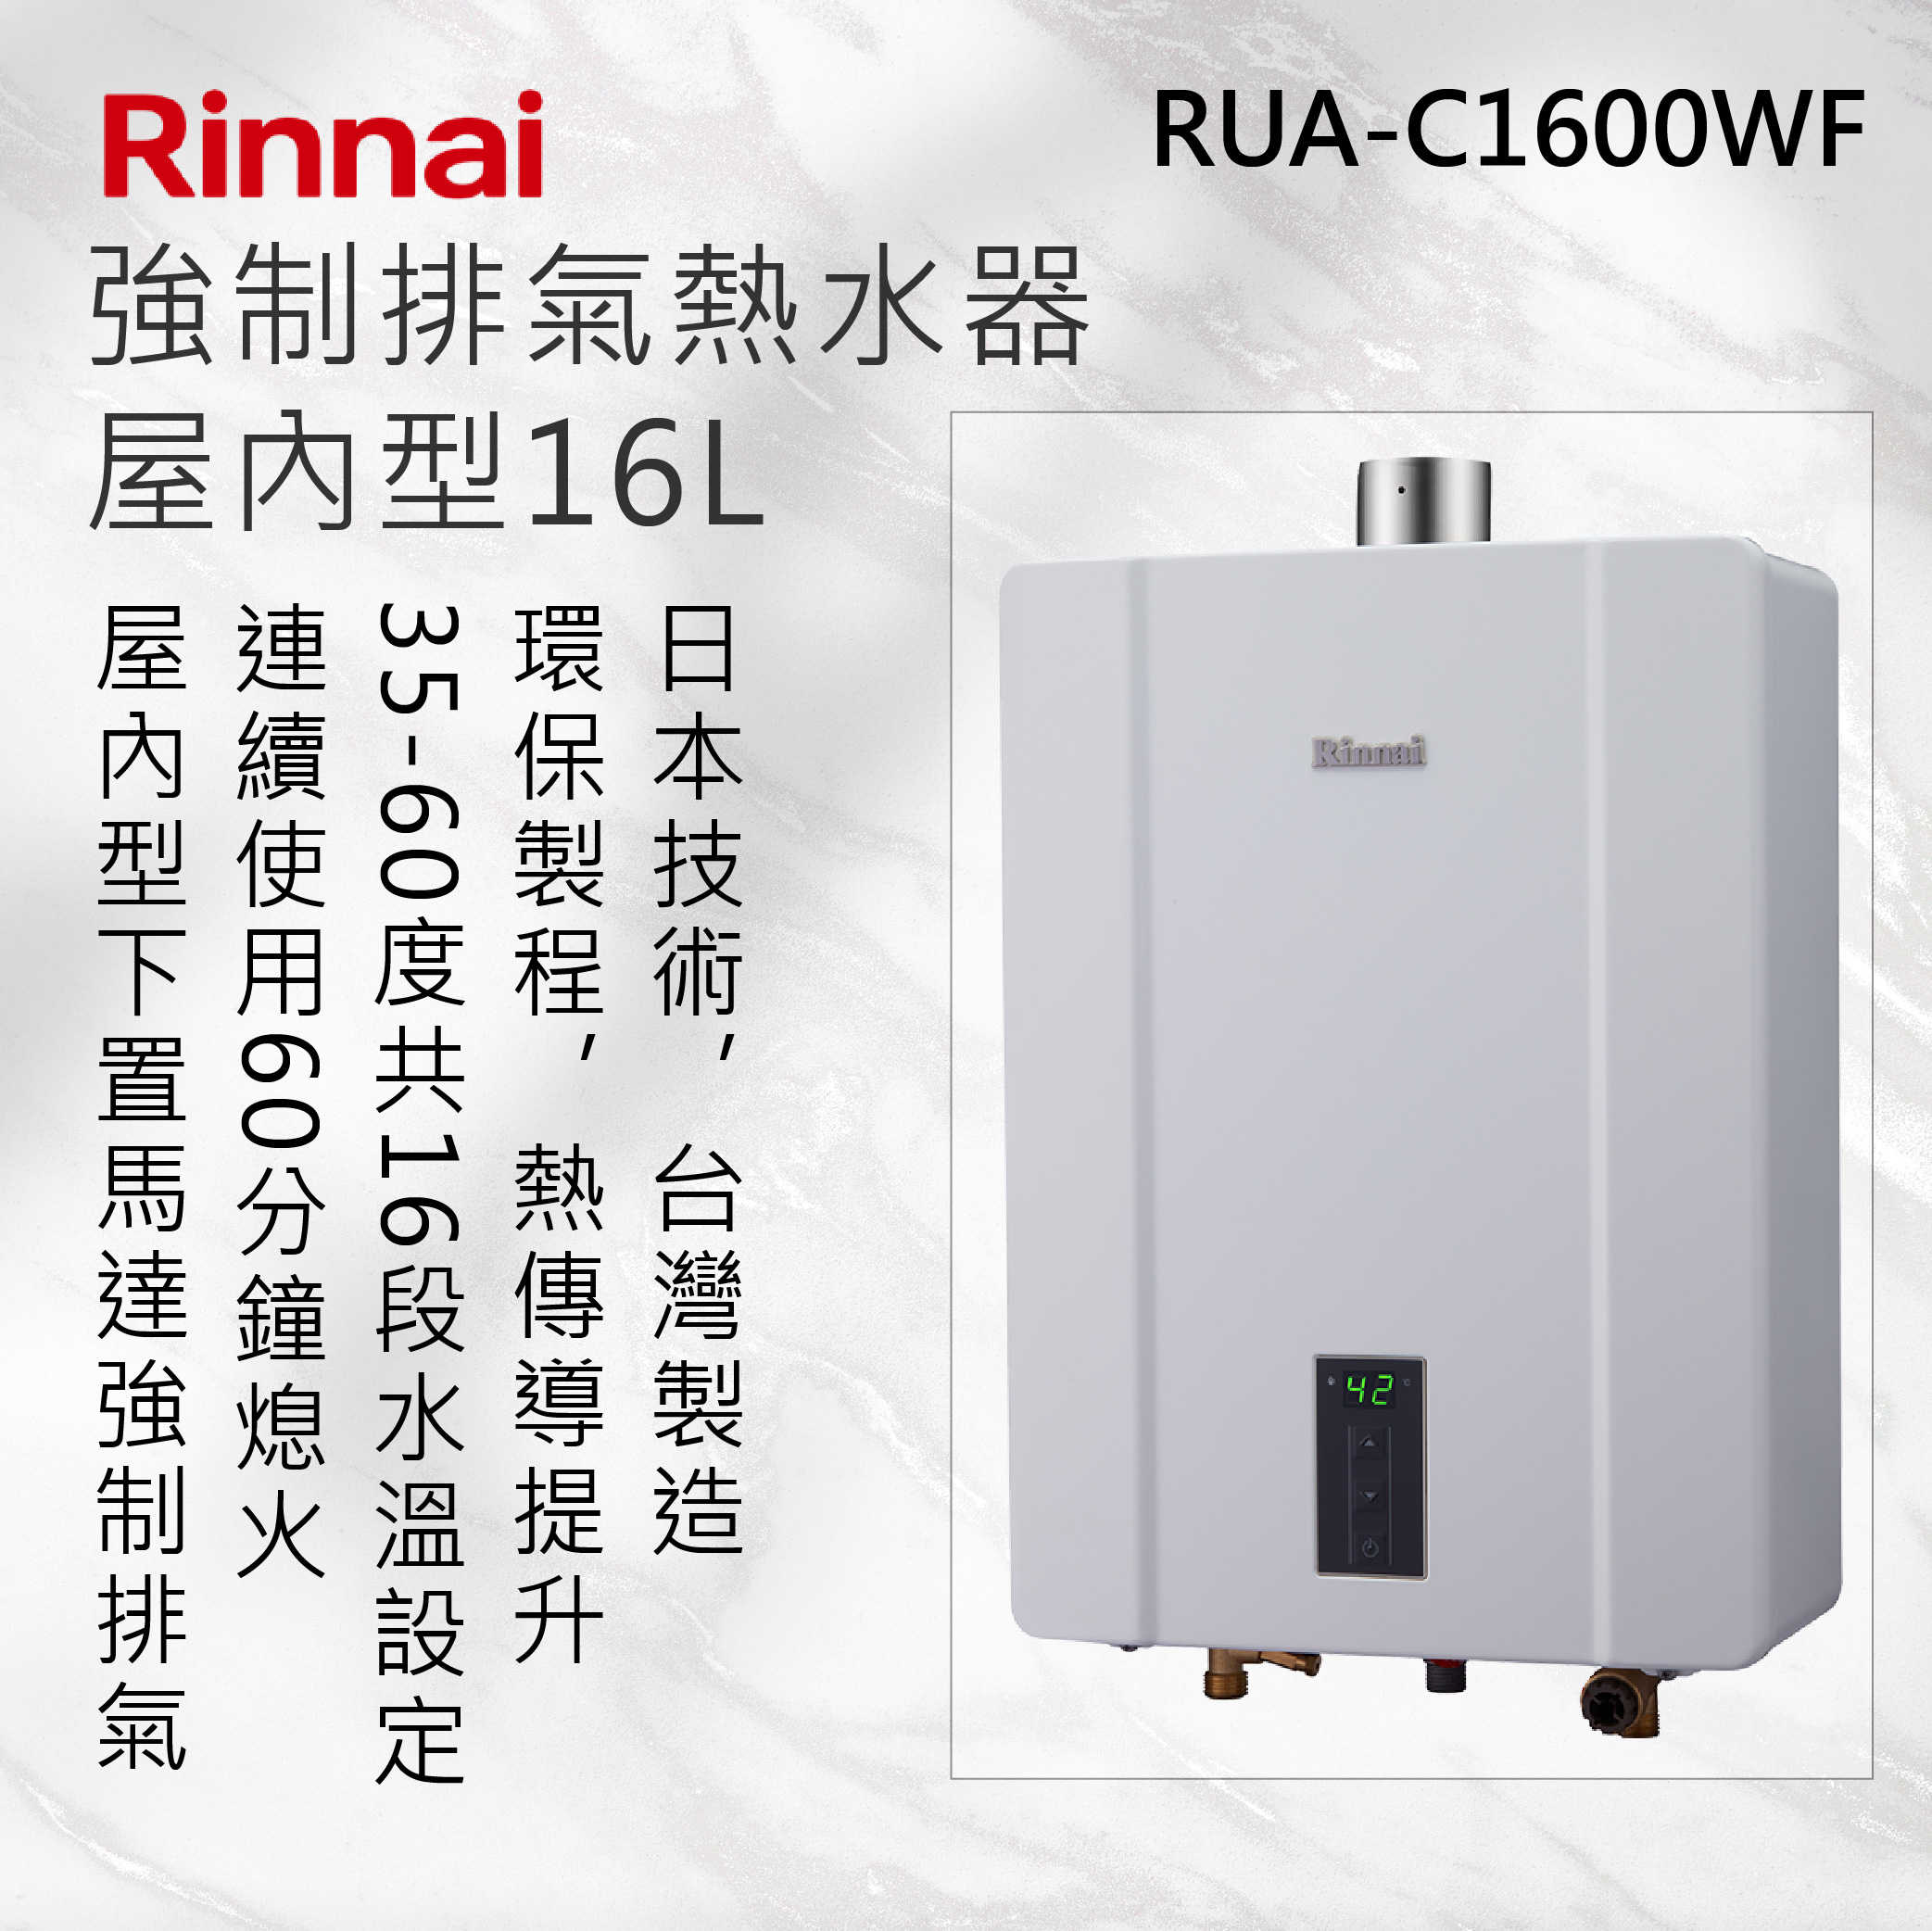 Rinnai林內【RUA-C1600WF】屋內型16L強制排氣熱水器 北北基安裝